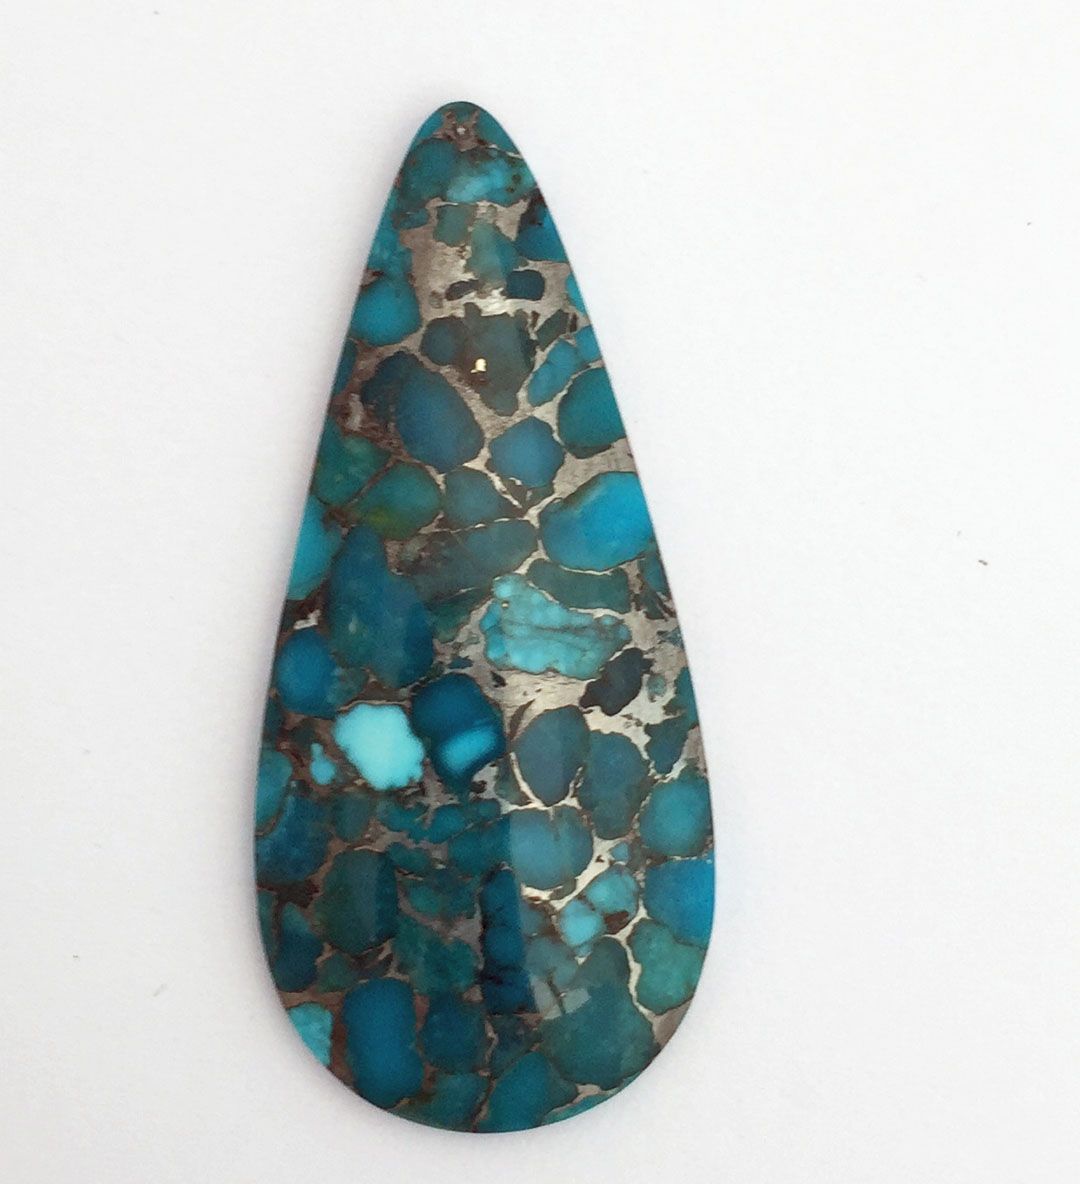 Mojave turquoise - a manmade gemstone